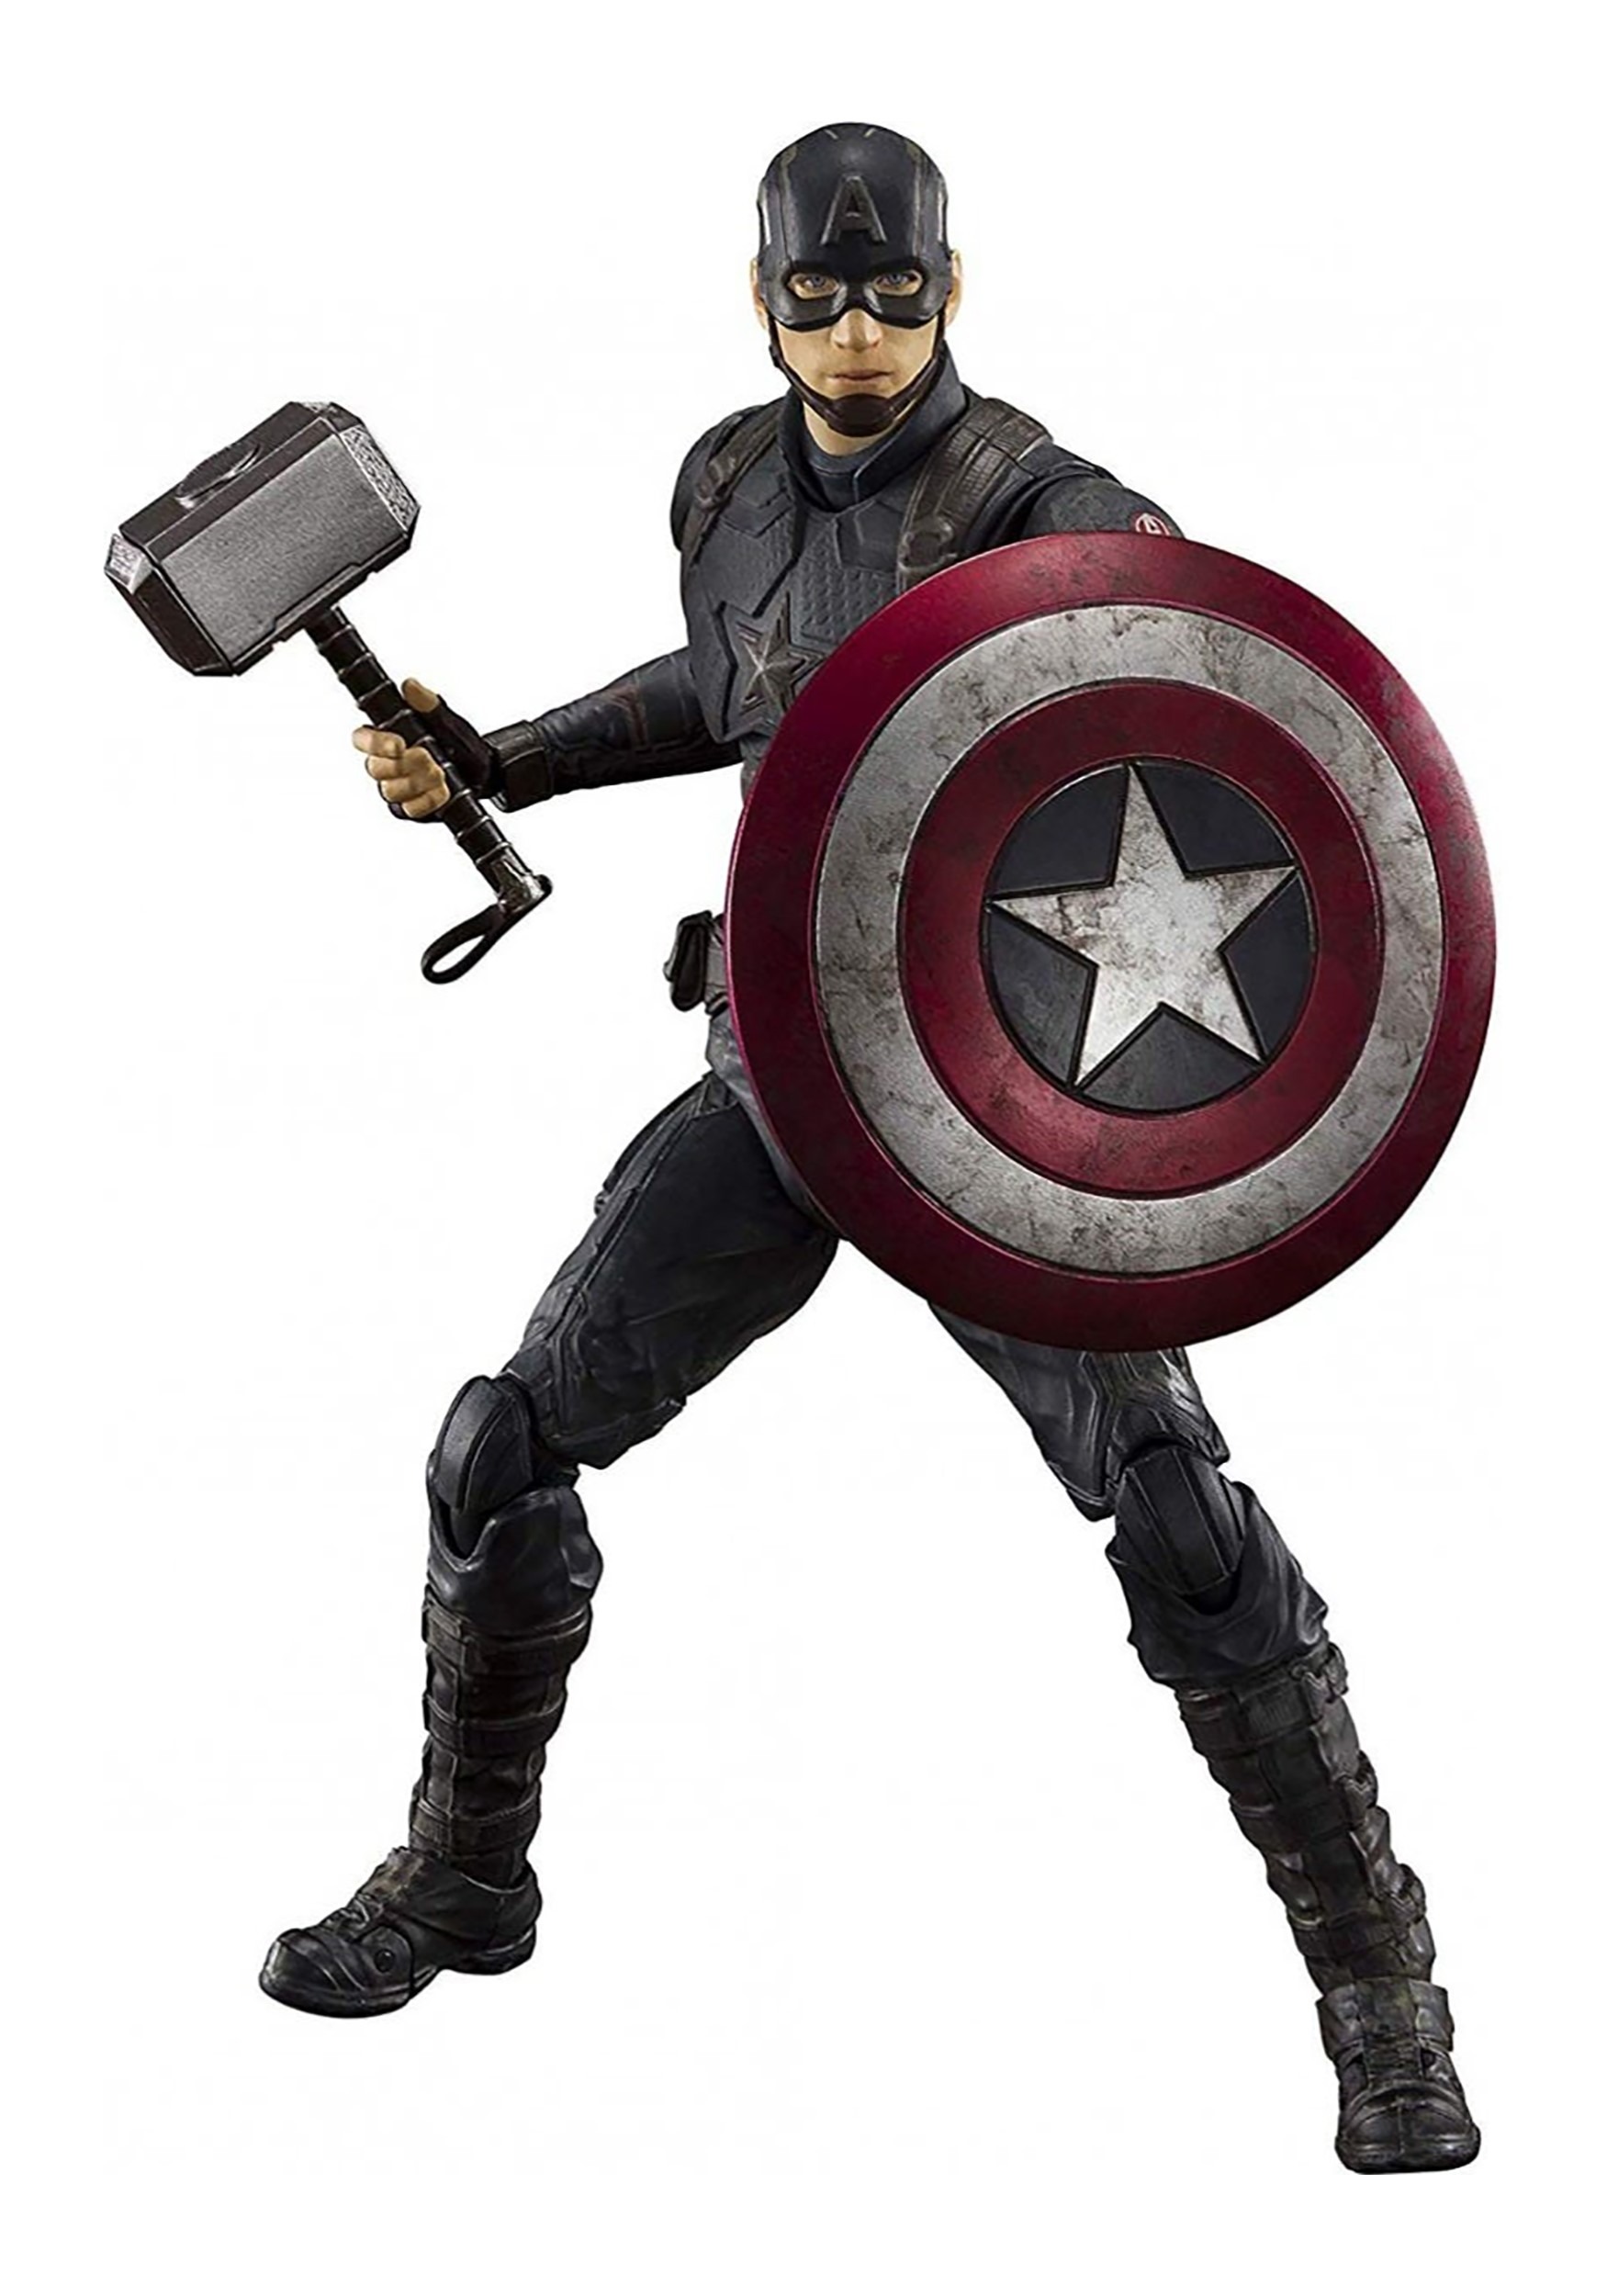 Avengers: End Game Captain America Figurine Final Battle Edition